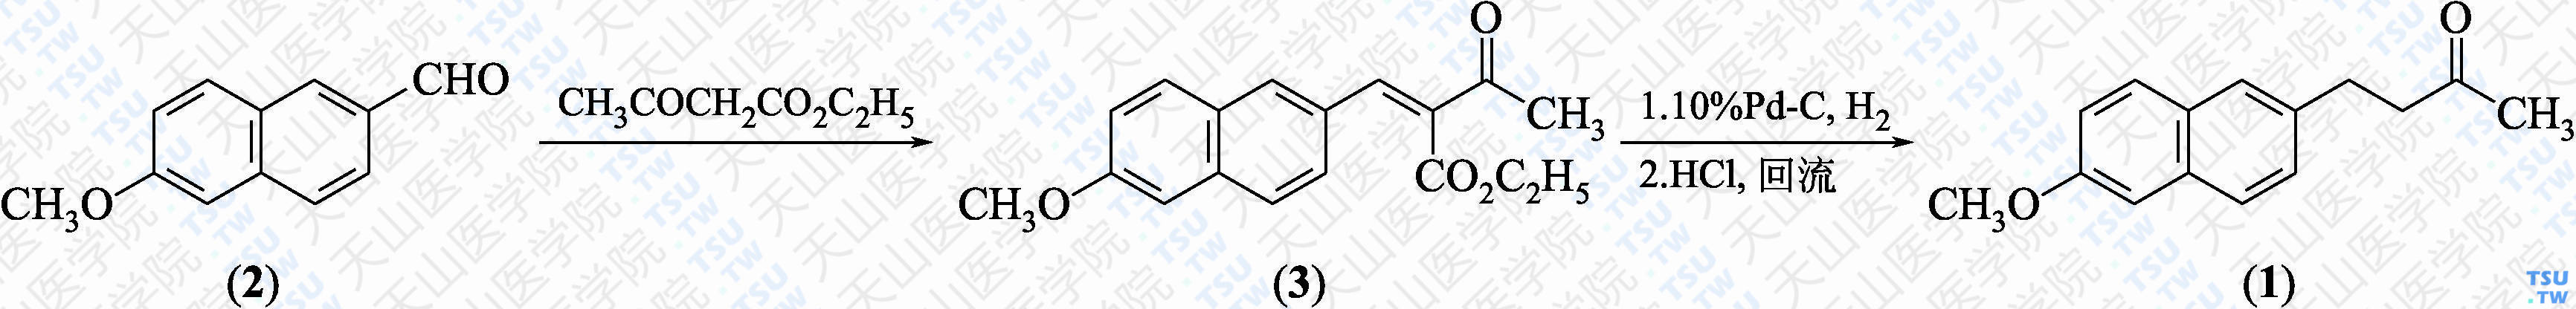 萘丁美酮（分子式：C<sub>15</sub>H<sub>16</sub>O<sub>2</sub>）的合成方法路线及其结构式